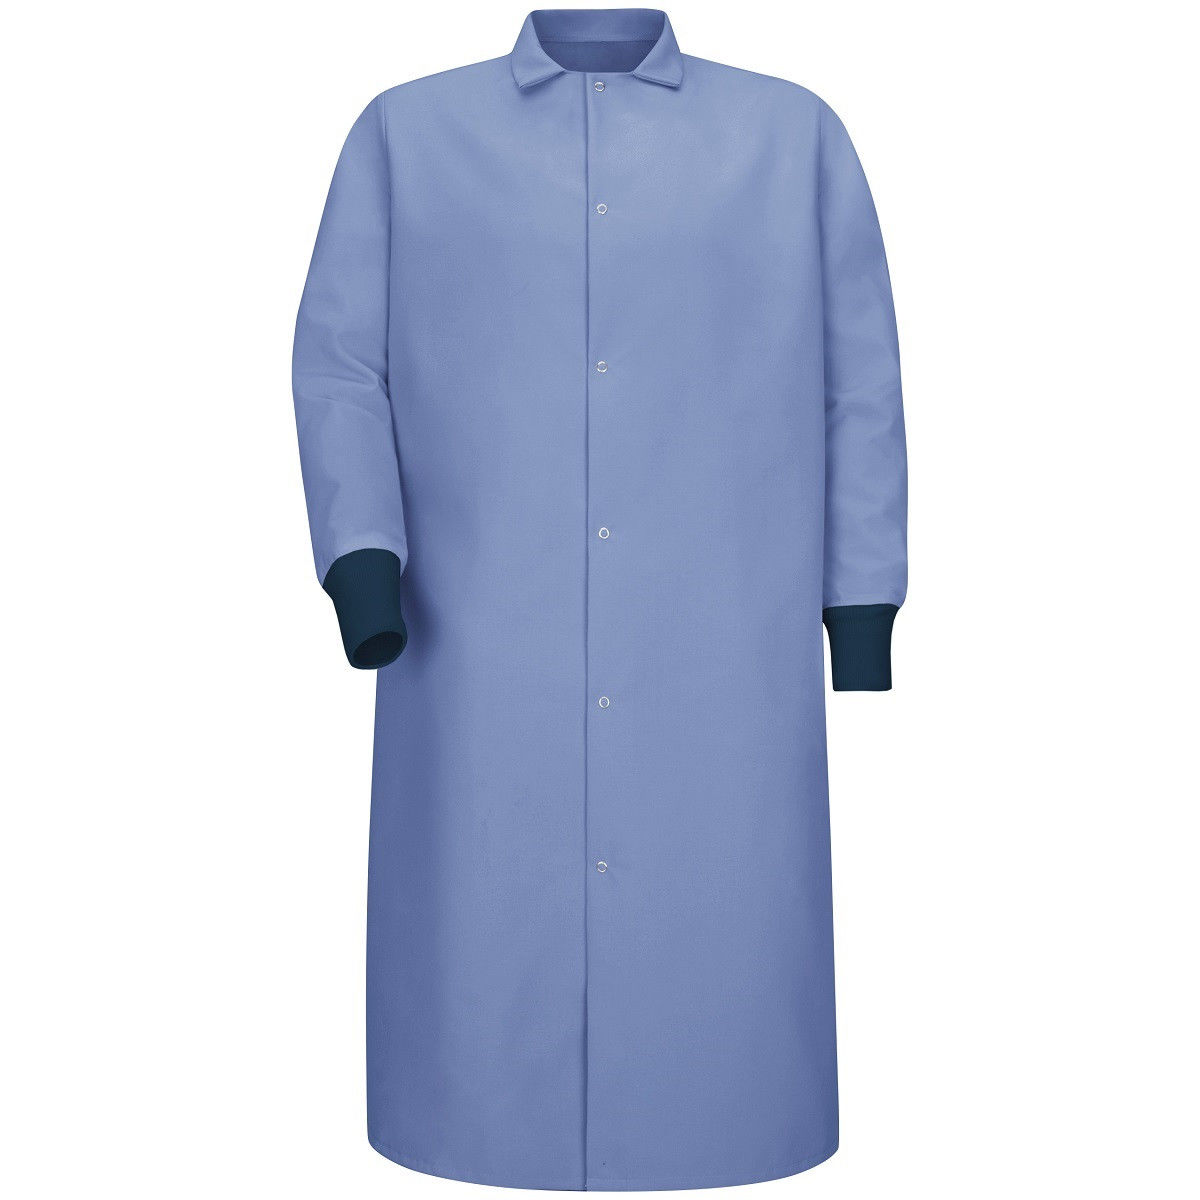 Can you describe the butcher coat, Red Kap KS60LB Pocketless Light Blue Butcher Coat?